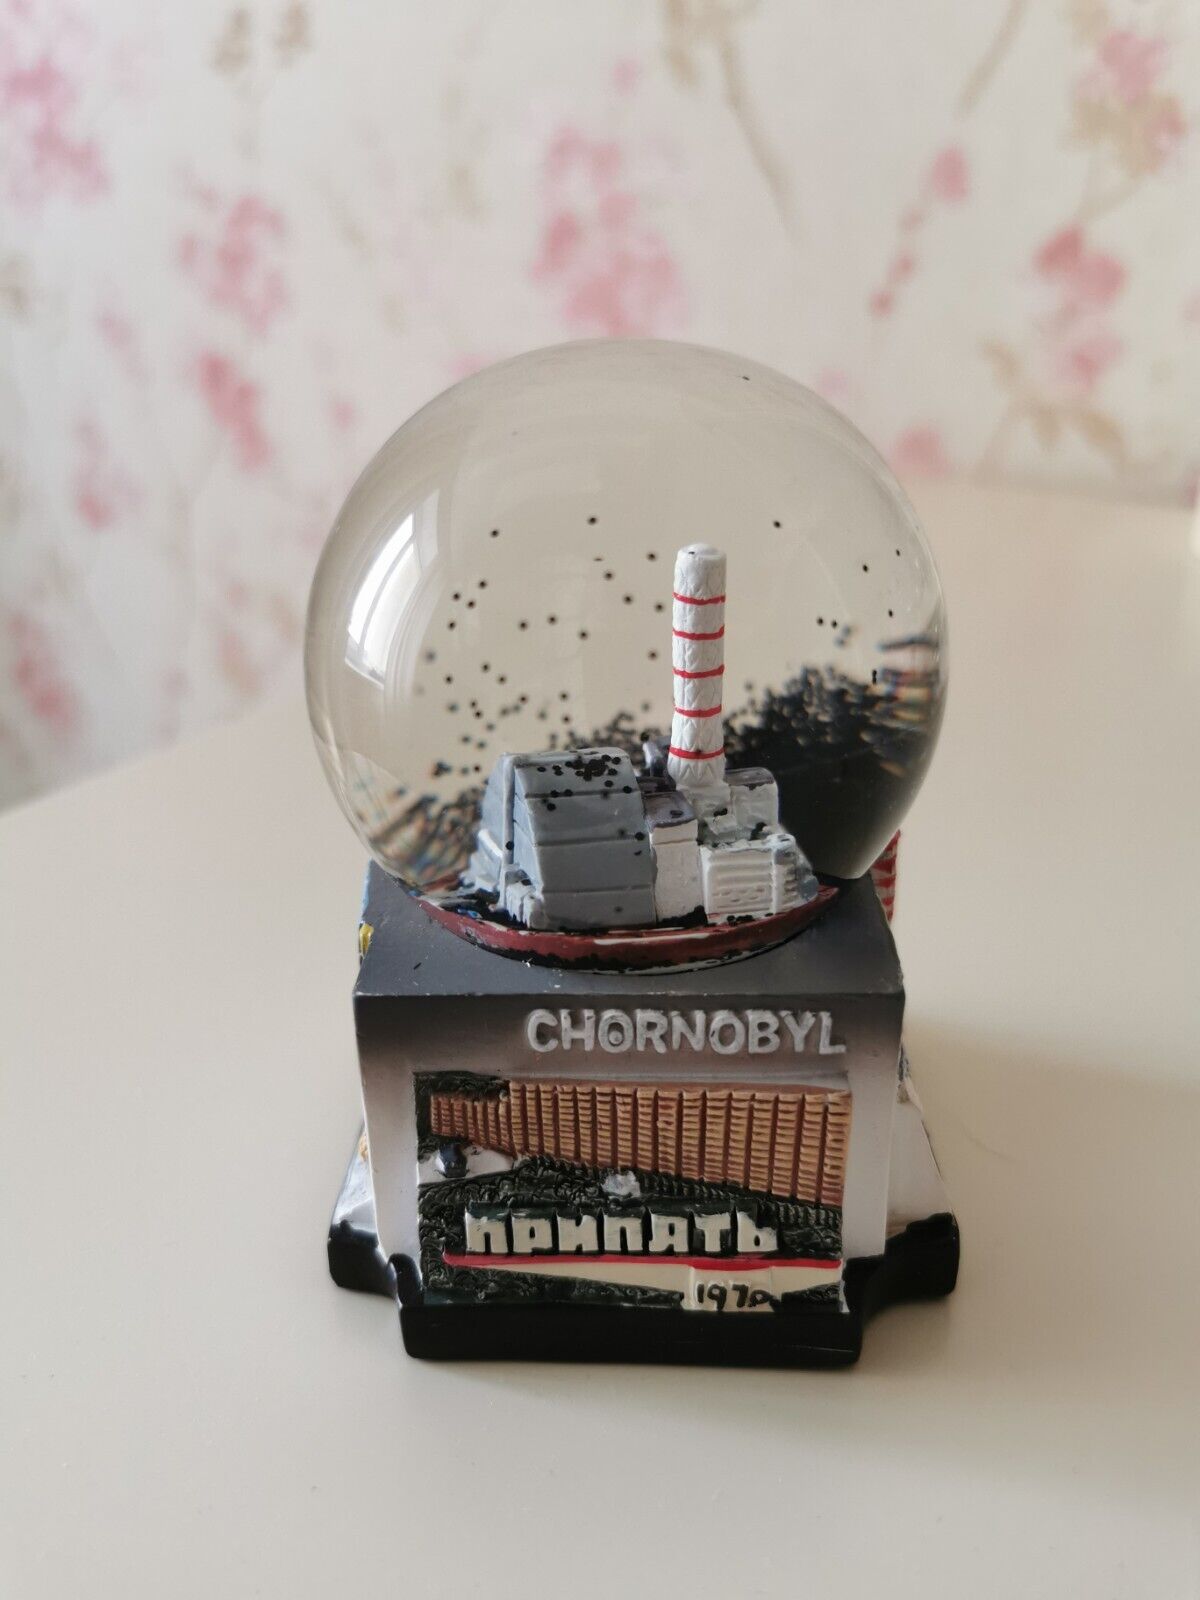 Chernobyl souvenir snow globe Pripyat disaster nuclear power plant USSR 1986